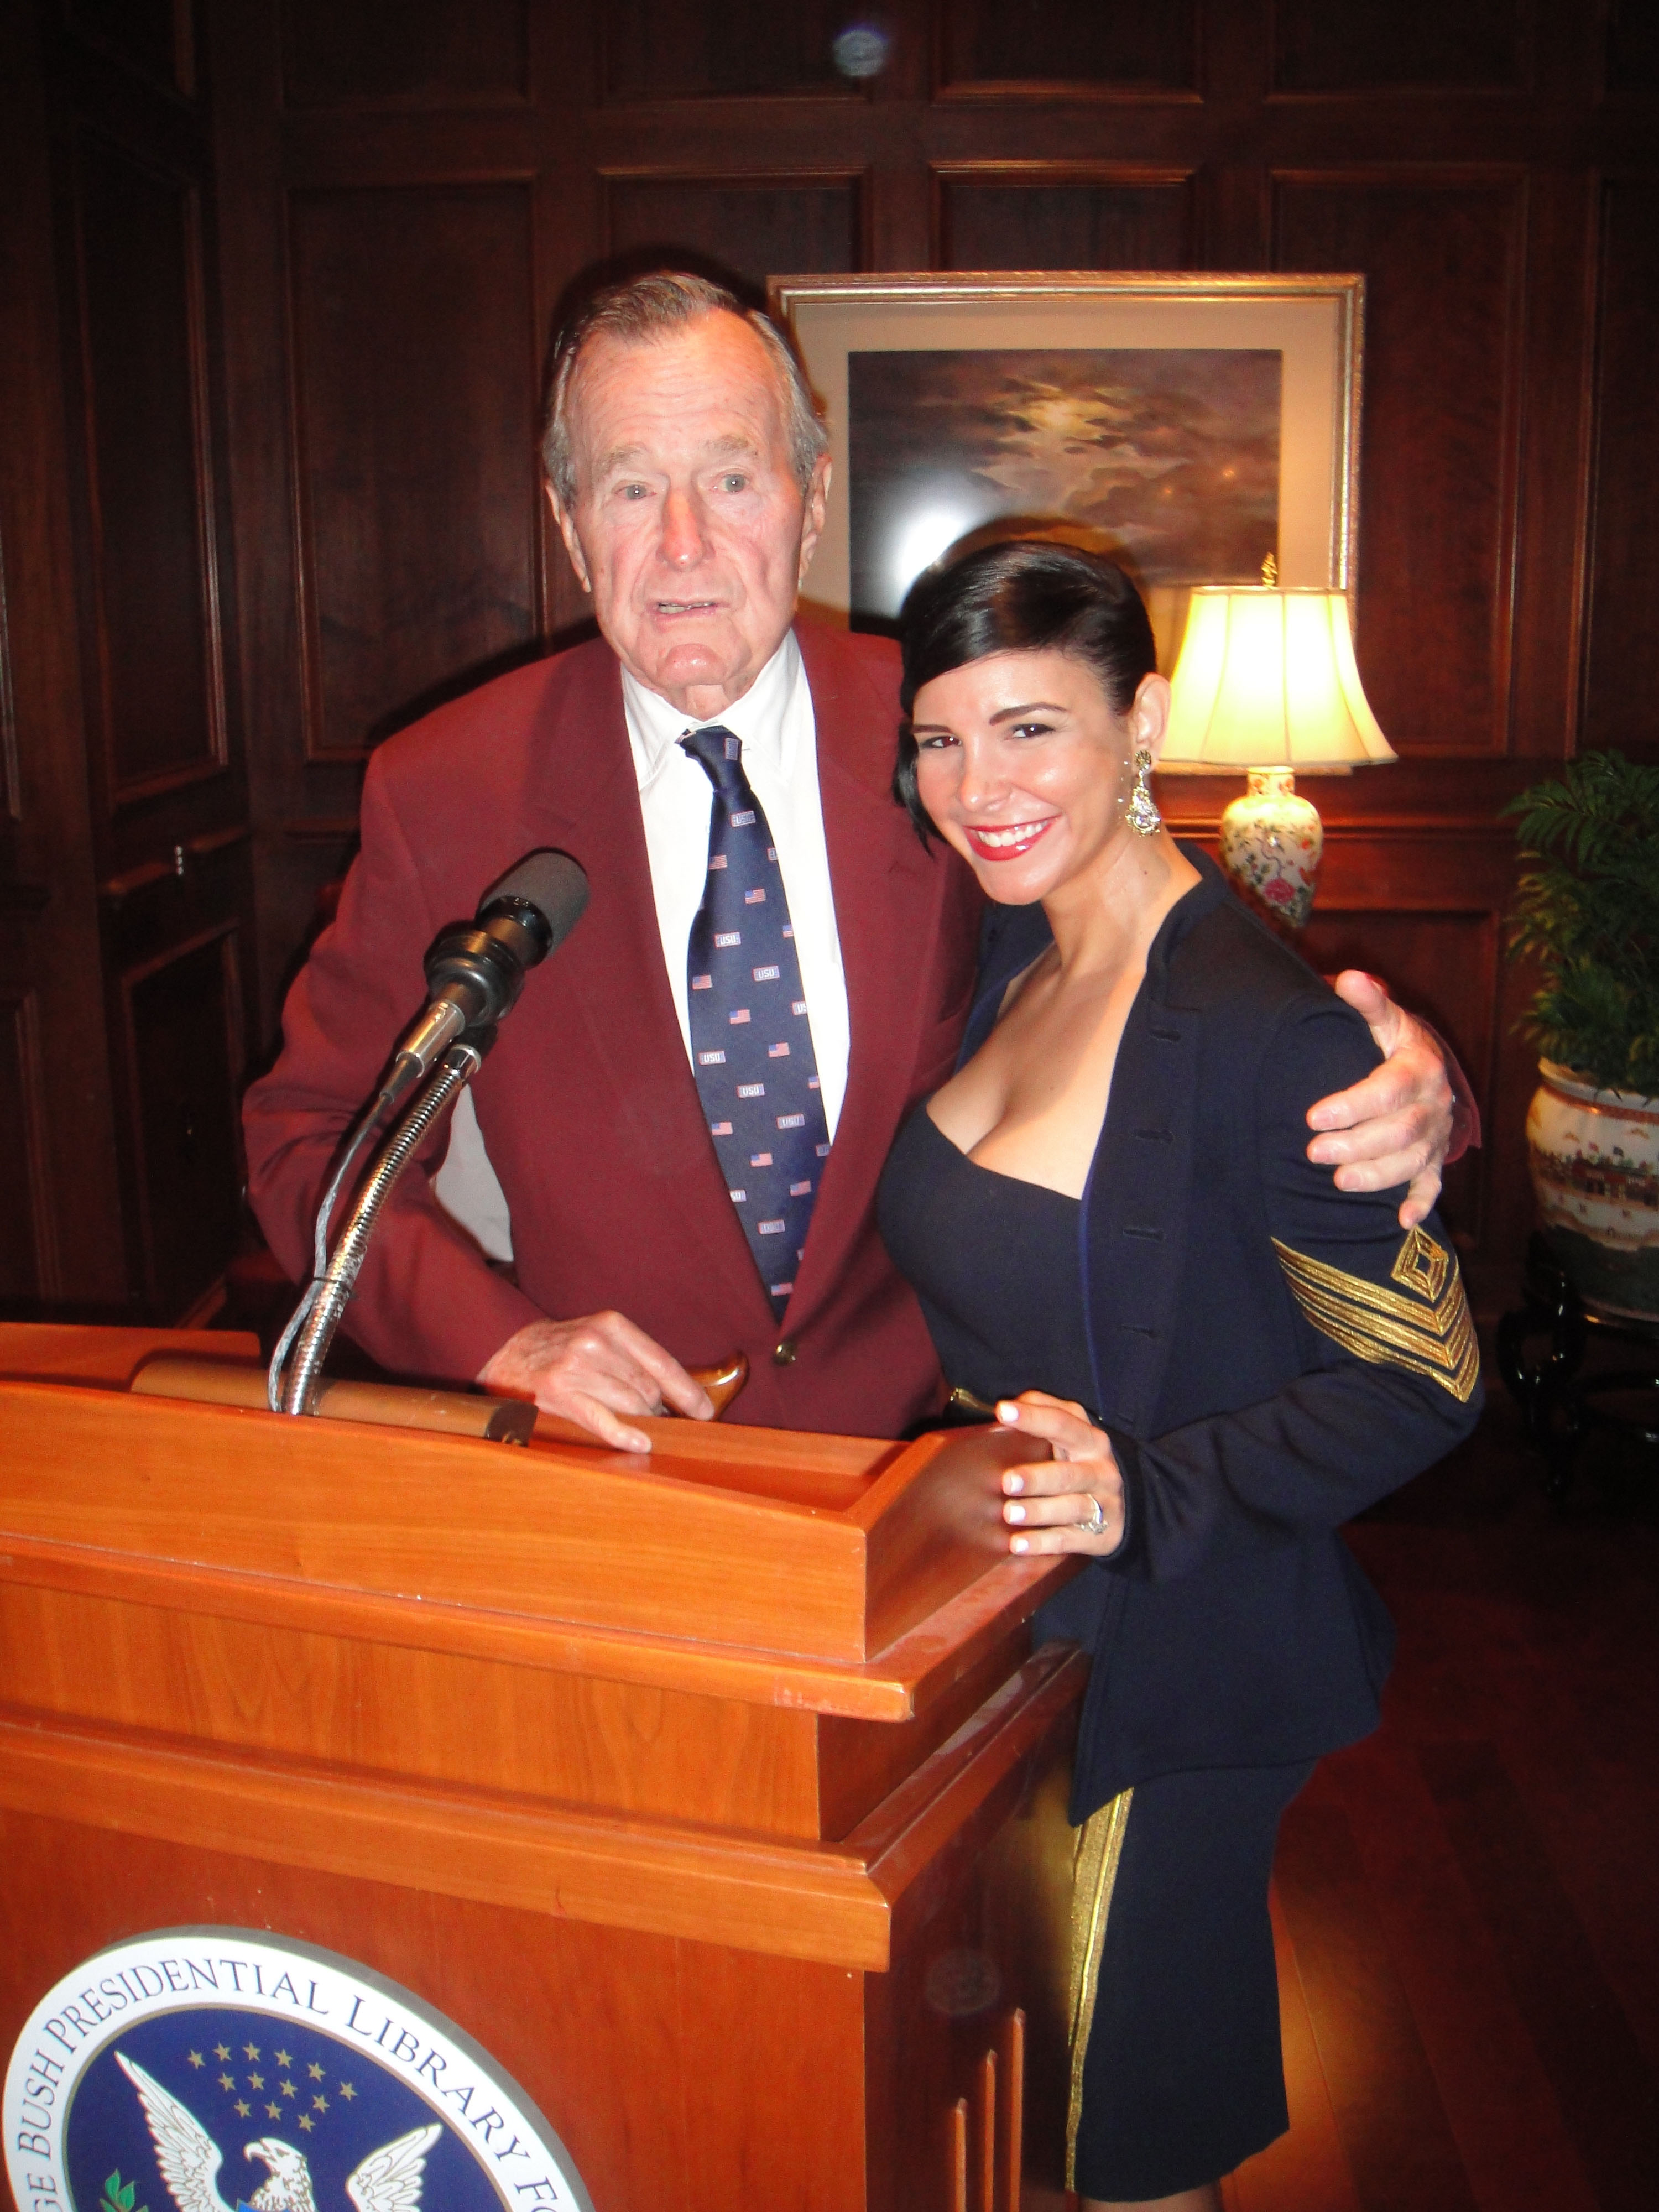 Presentin with President Bush